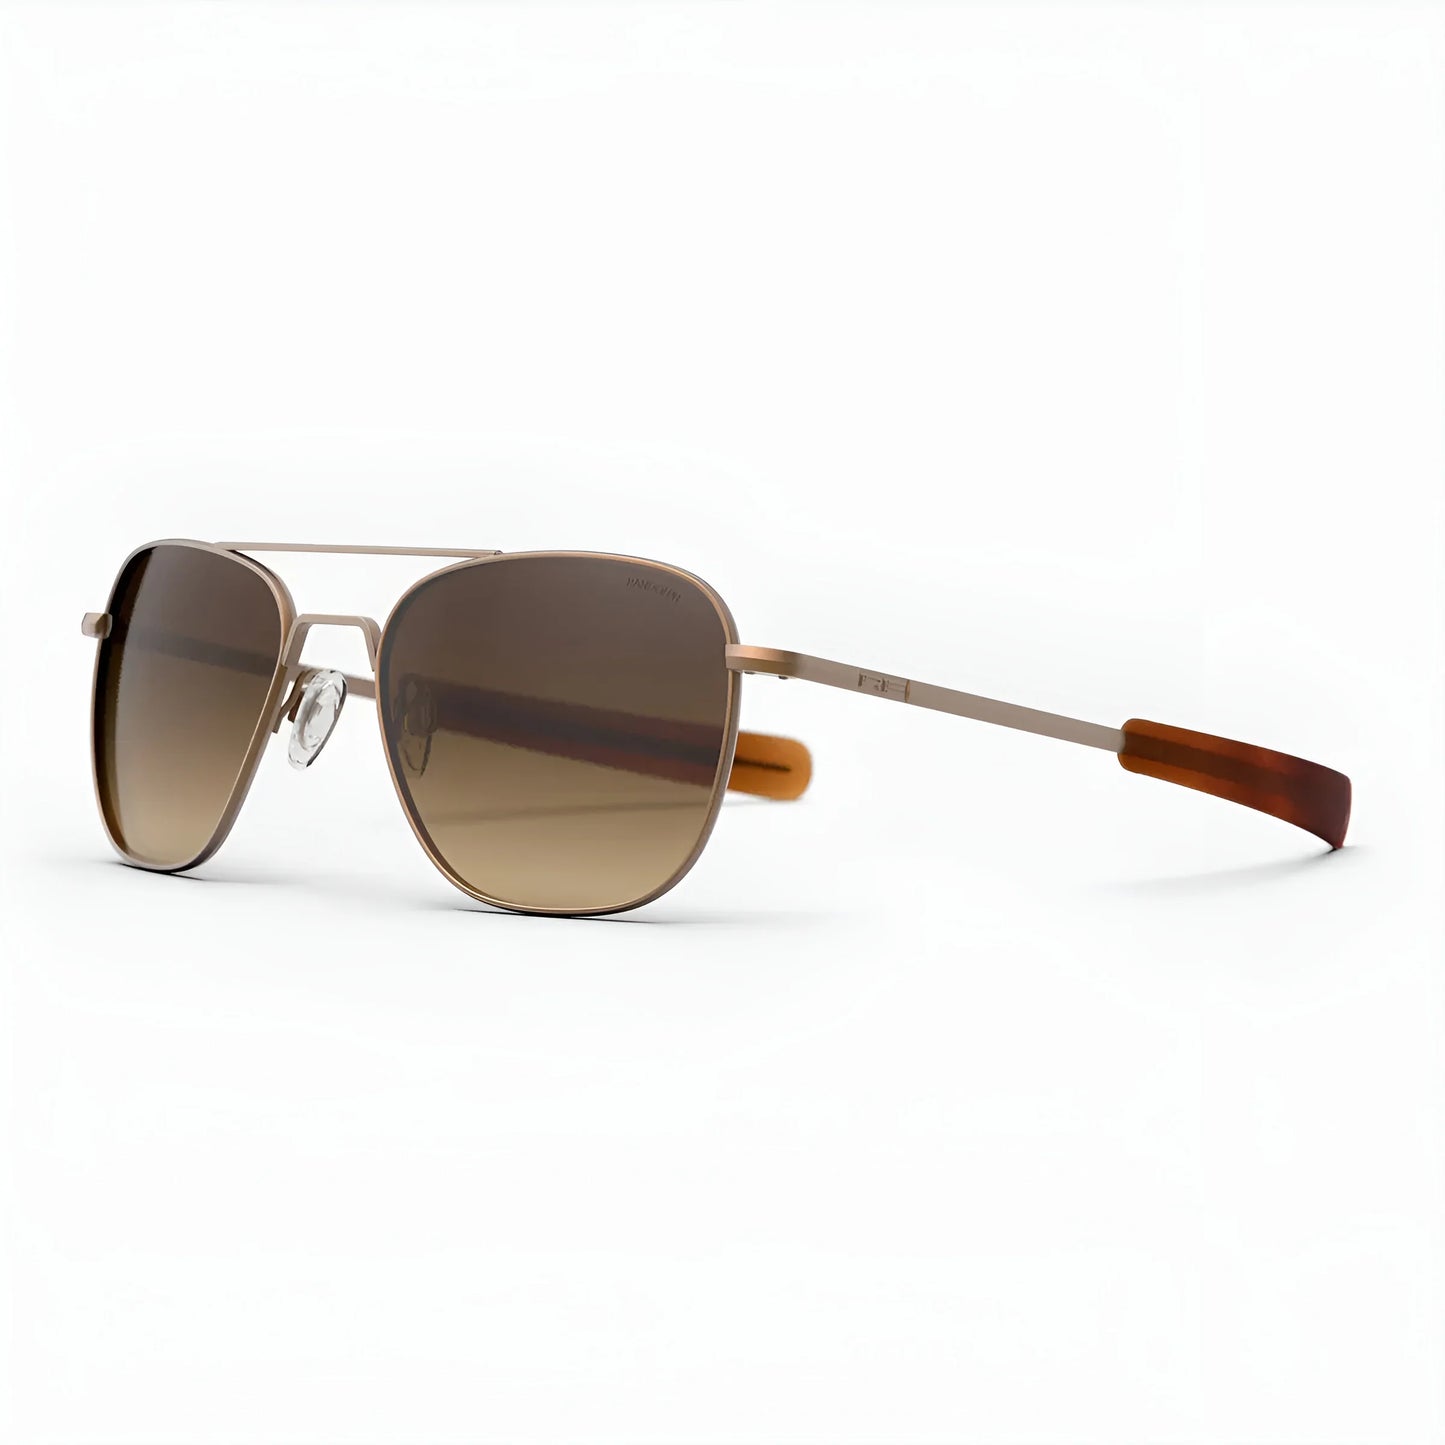 Randolph AVIATOR Sunglasses | Size 58 / 22k Satin Chocolate Gold / Cape Sand Polarized Gradient Nylon